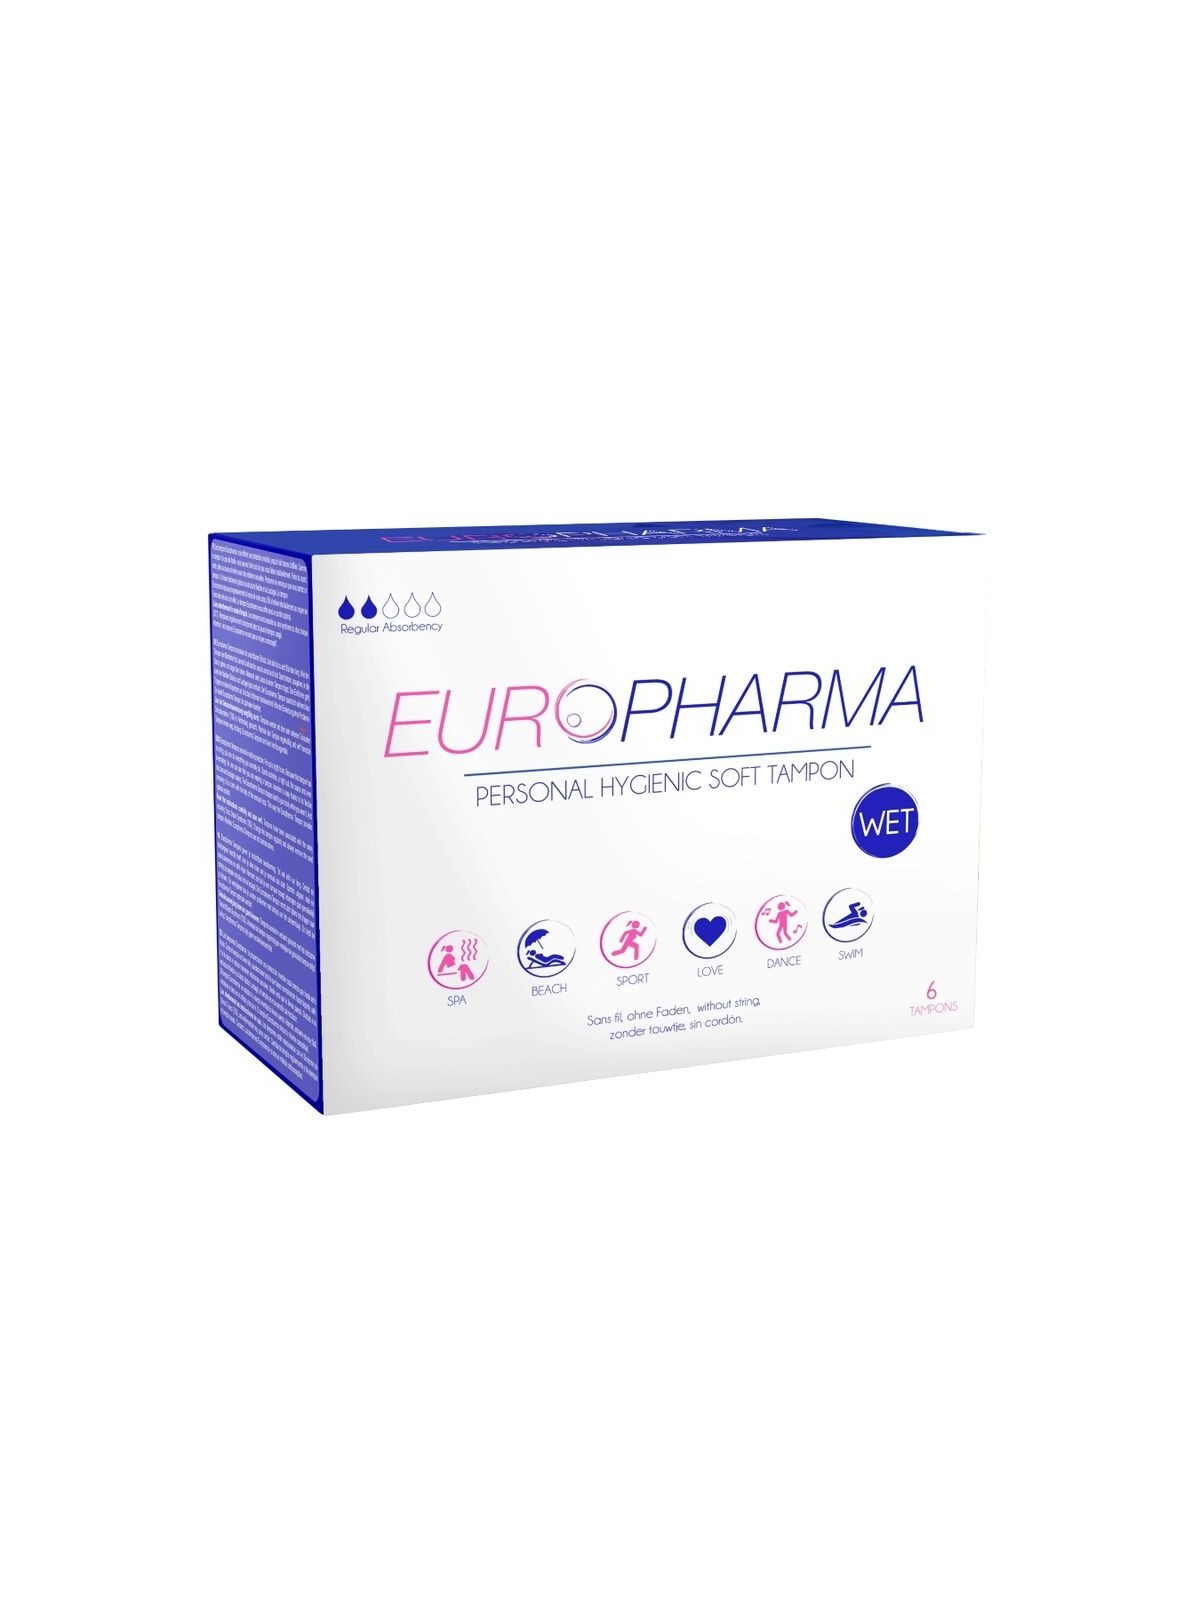 Europharma Tampons Tampones Action 6 uds - Comprar Menstruación Europharma - Tampones & copas menstruales (1)